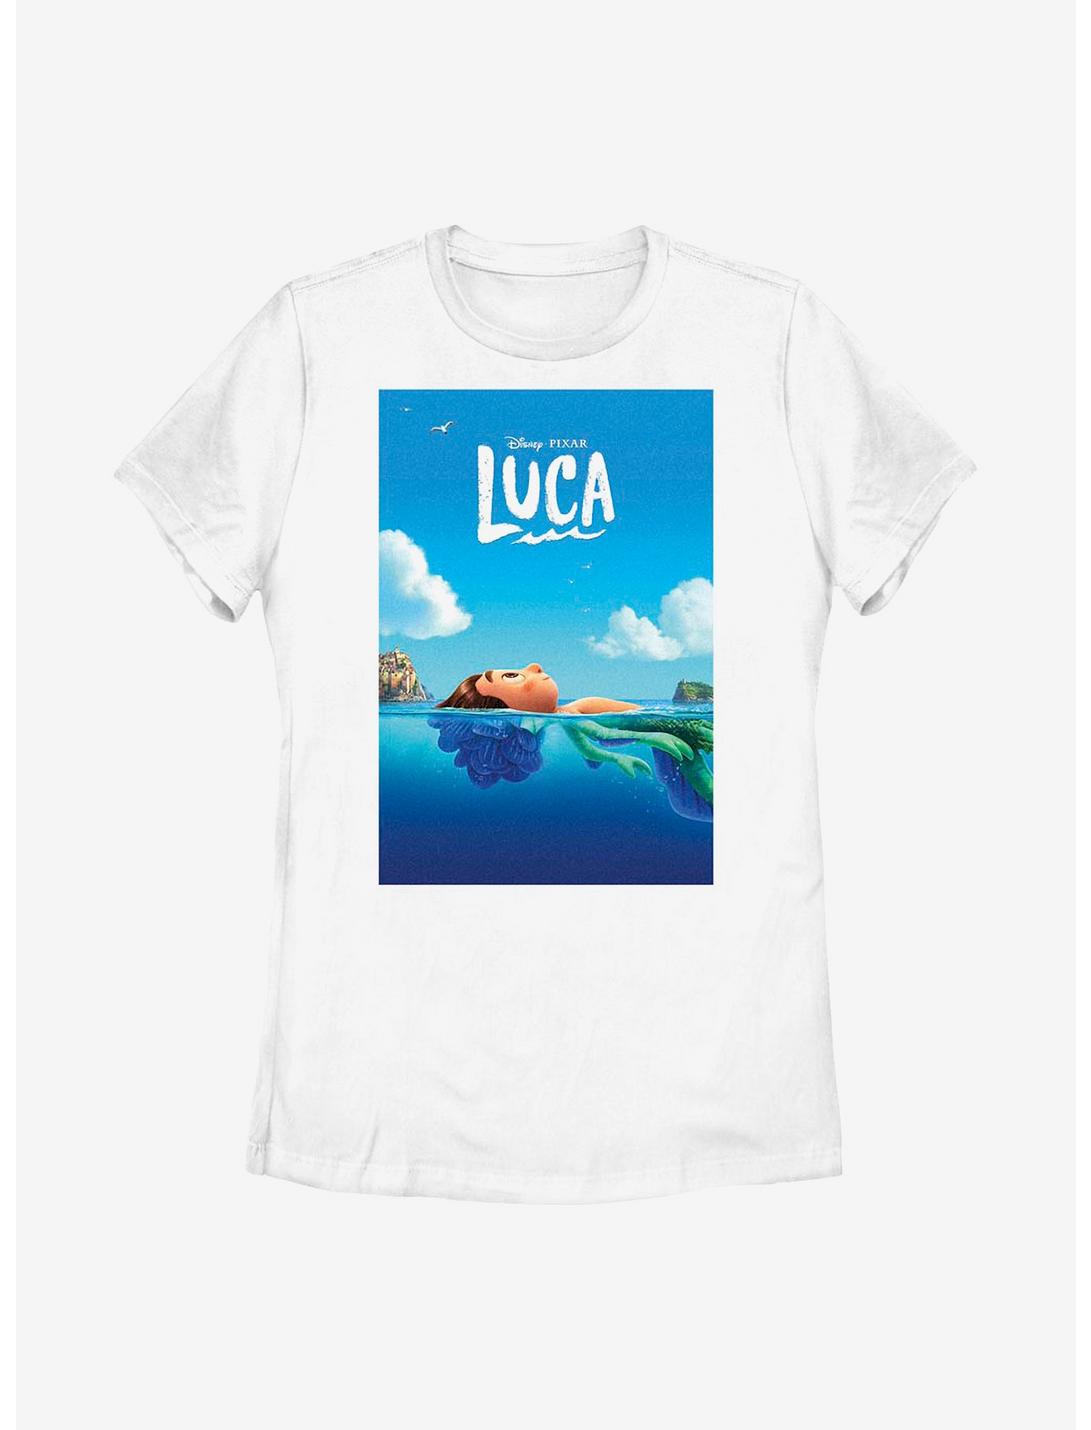 Disney Pixar Luca Poster Womens T-Shirt, WHITE, hi-res